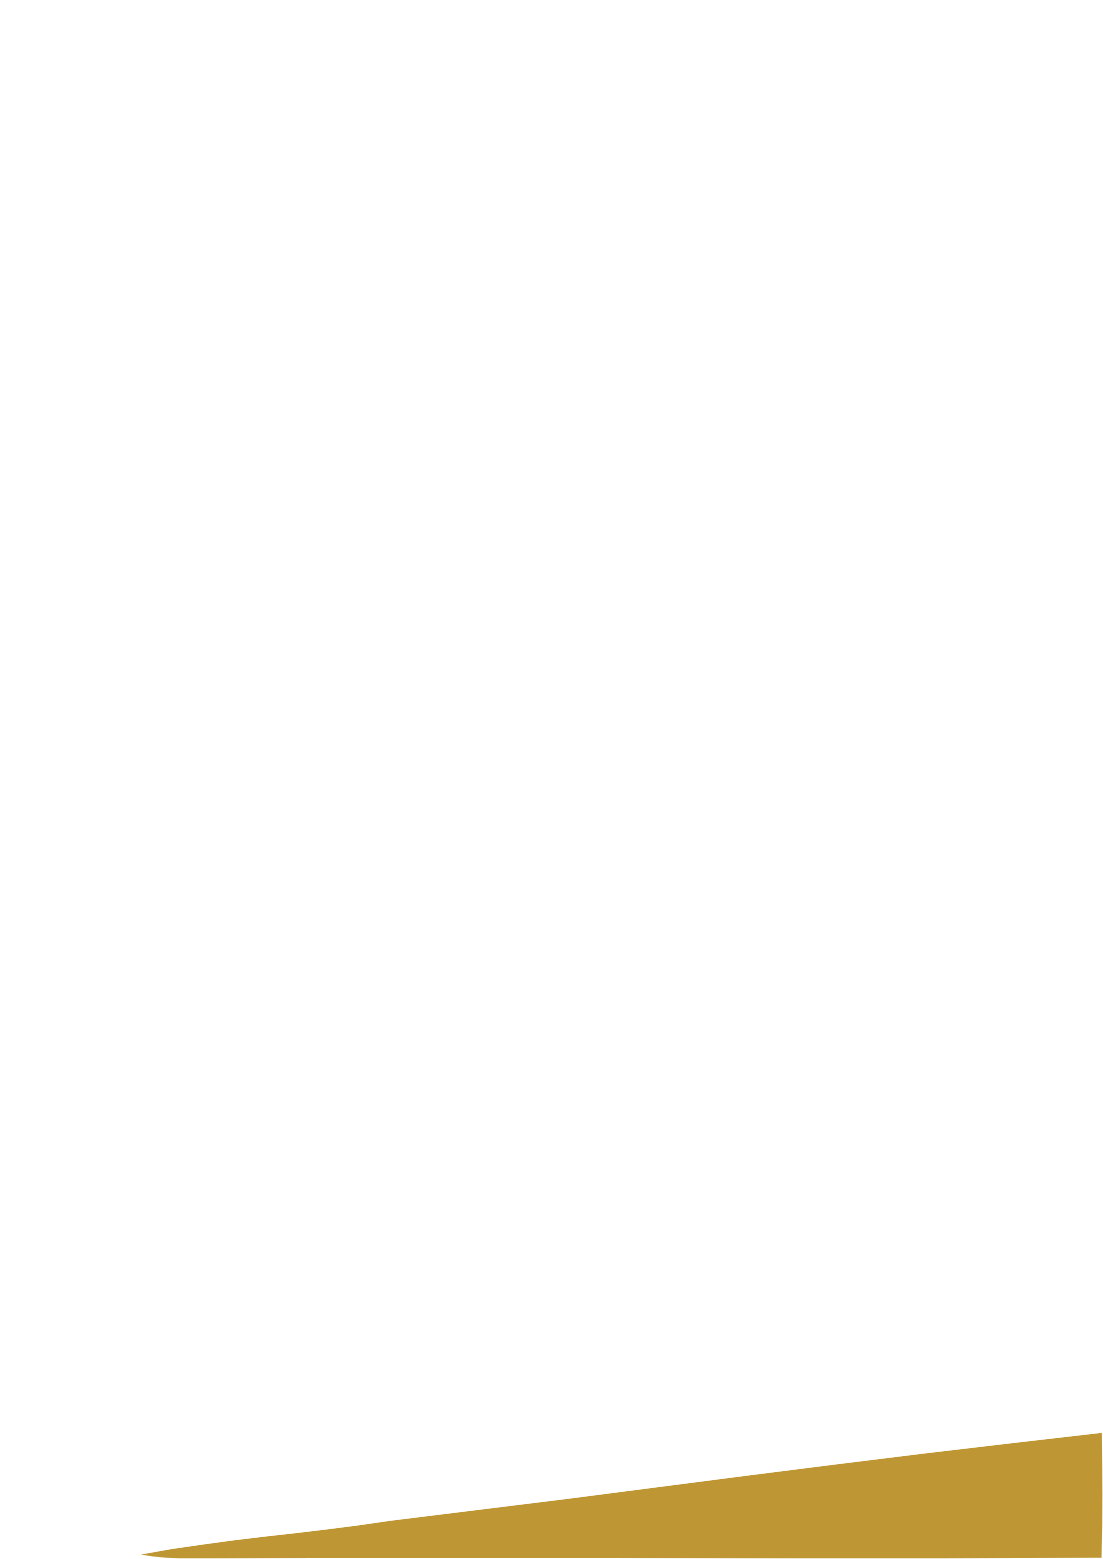 Lundin Gold logo for dark backgrounds (transparent PNG)